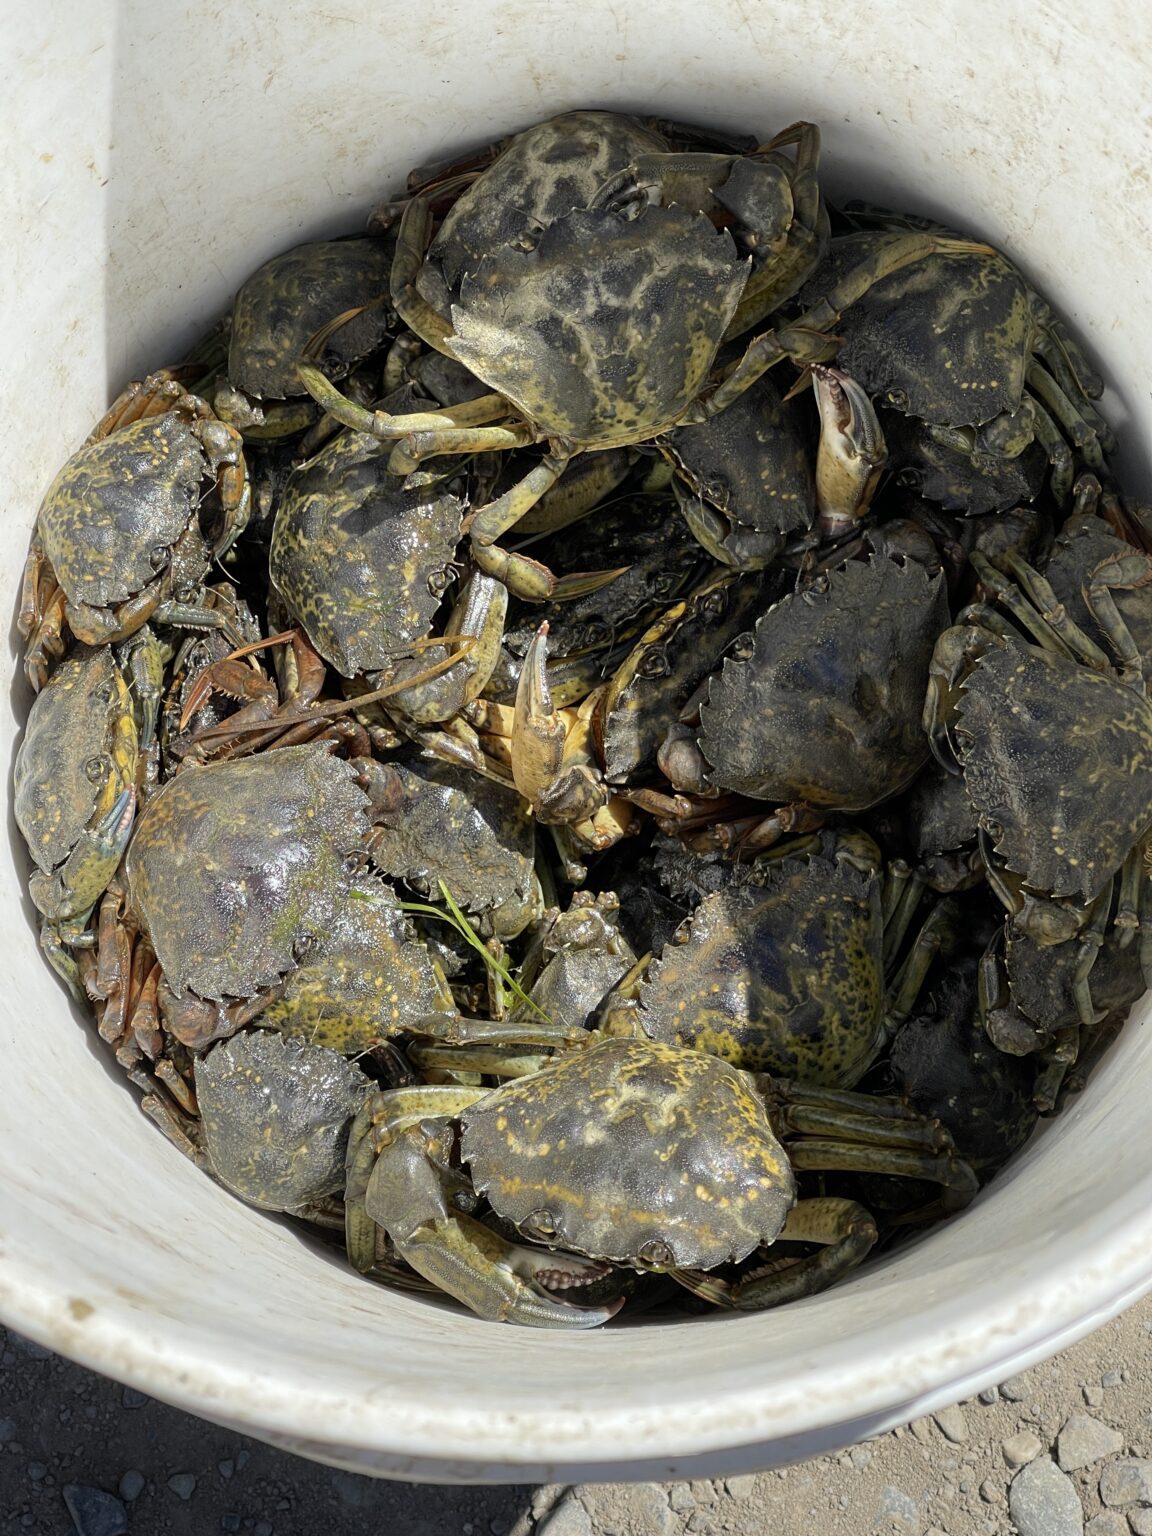 European green crabs are an invasive species